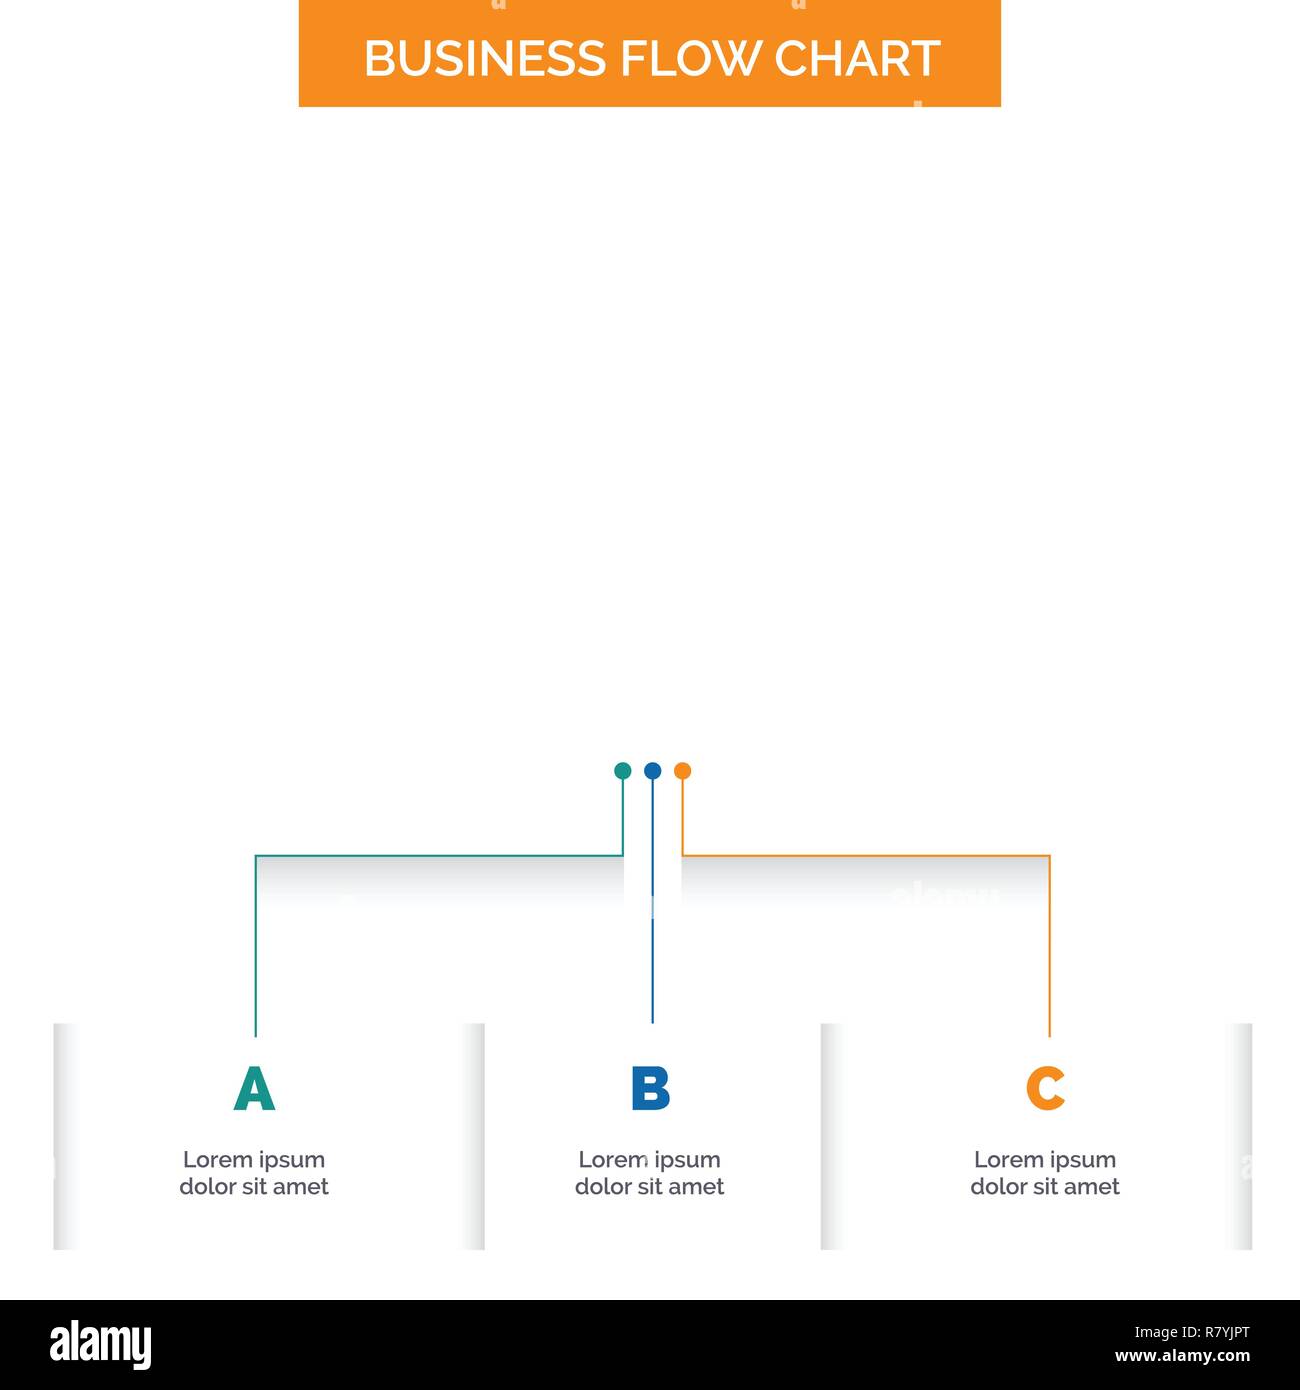 Debate Flow Chart Template